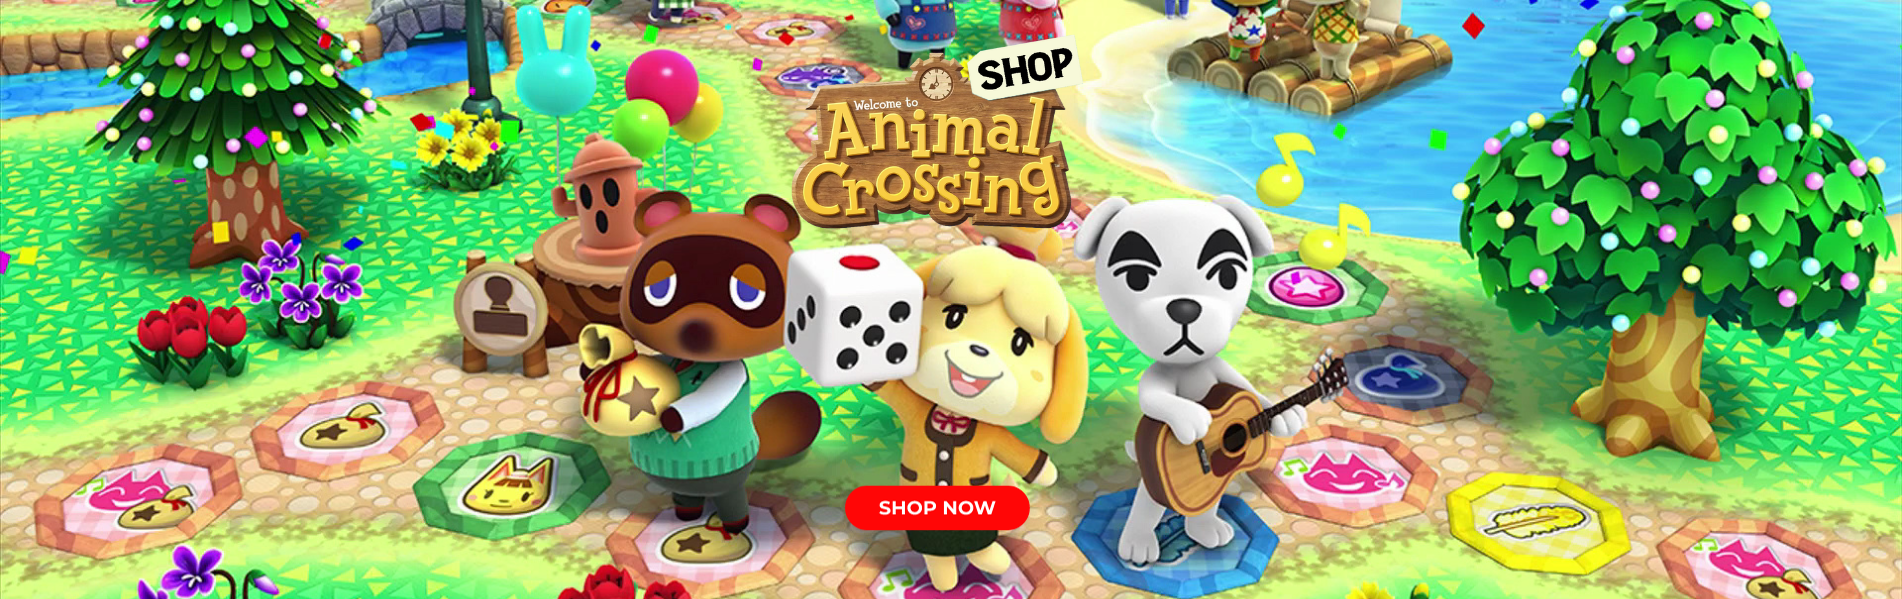 Animal Crossing Shop Banner 1